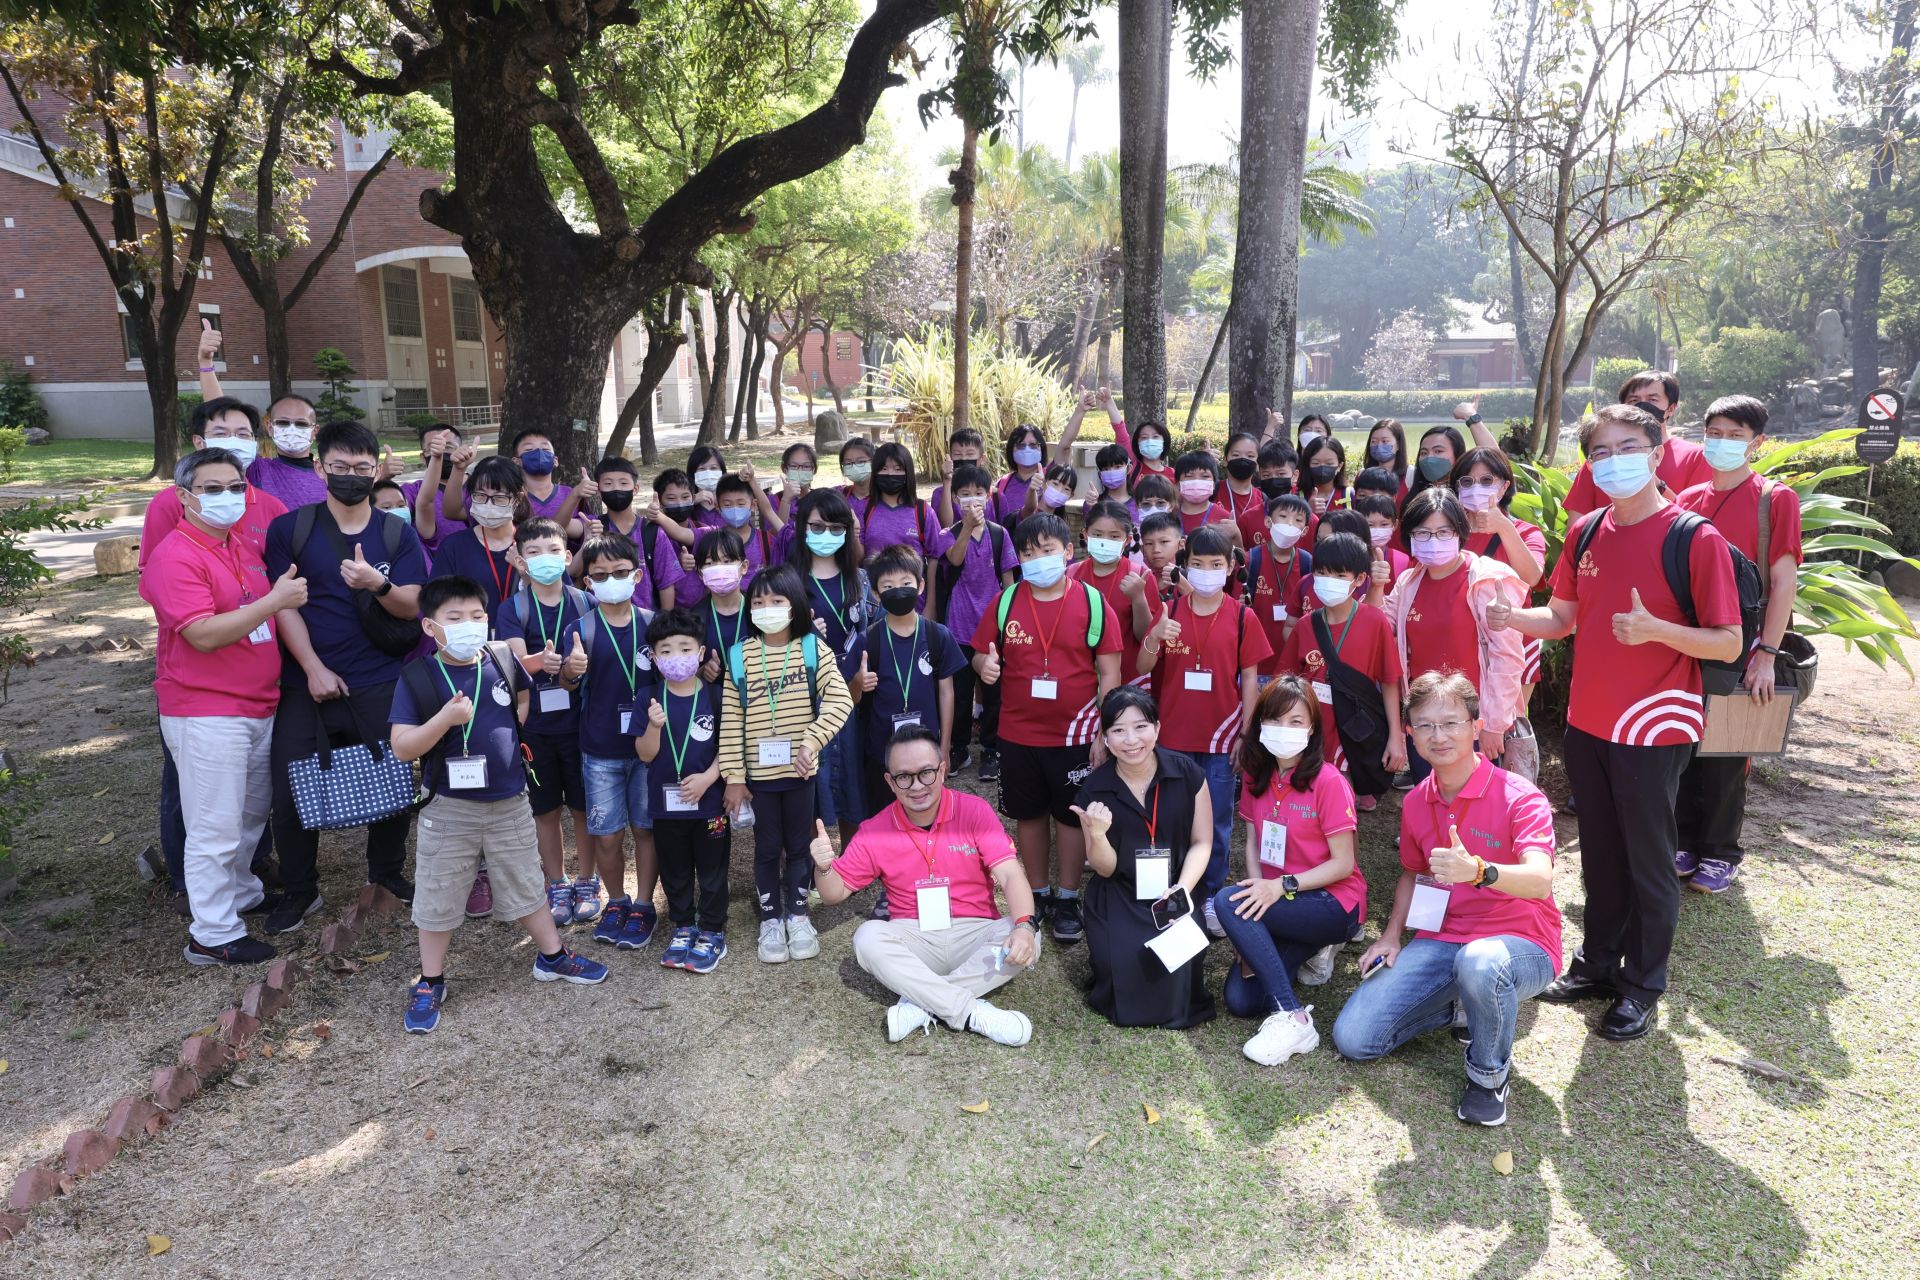 NCKU EMBA 躍榕盟 Organizes organized the event "Let's Spread Love - Tainan's Rural Elementary School Exploring NCKU"